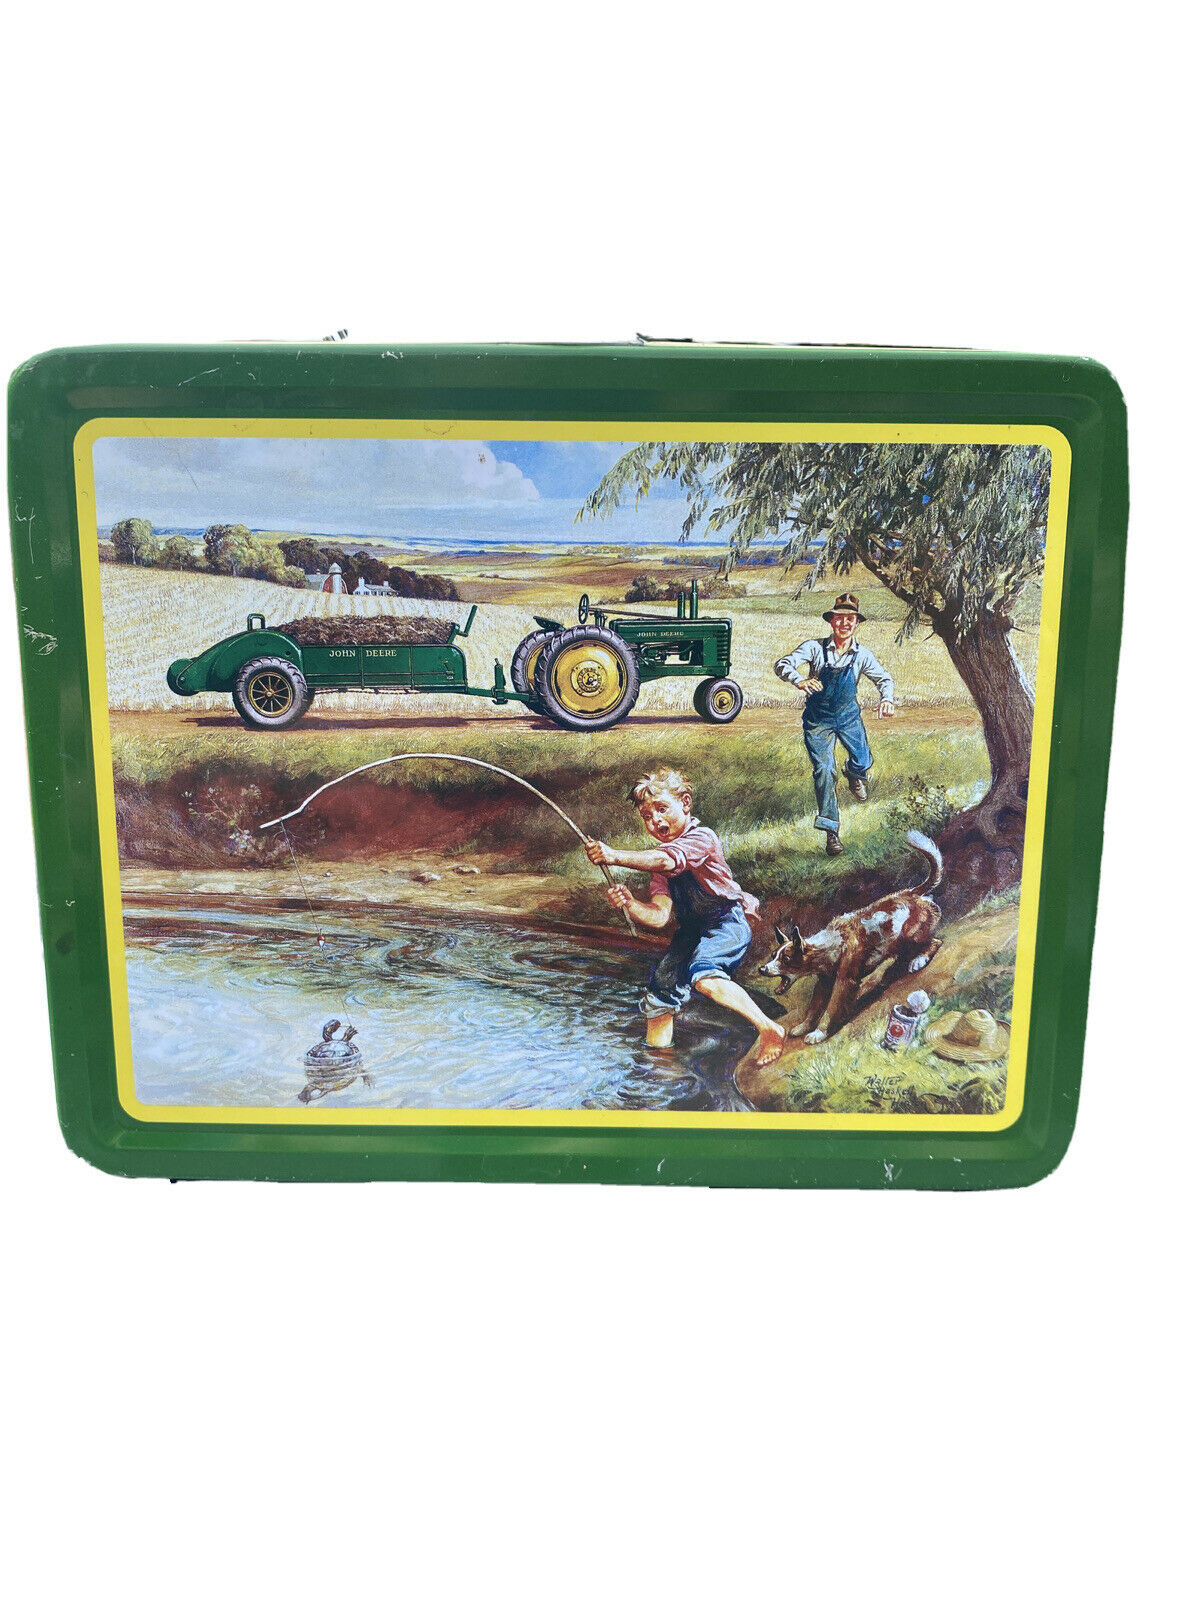 Vintage John Deere Metal Lunch Box "turtle Trouble" Boy Fishing With Dad